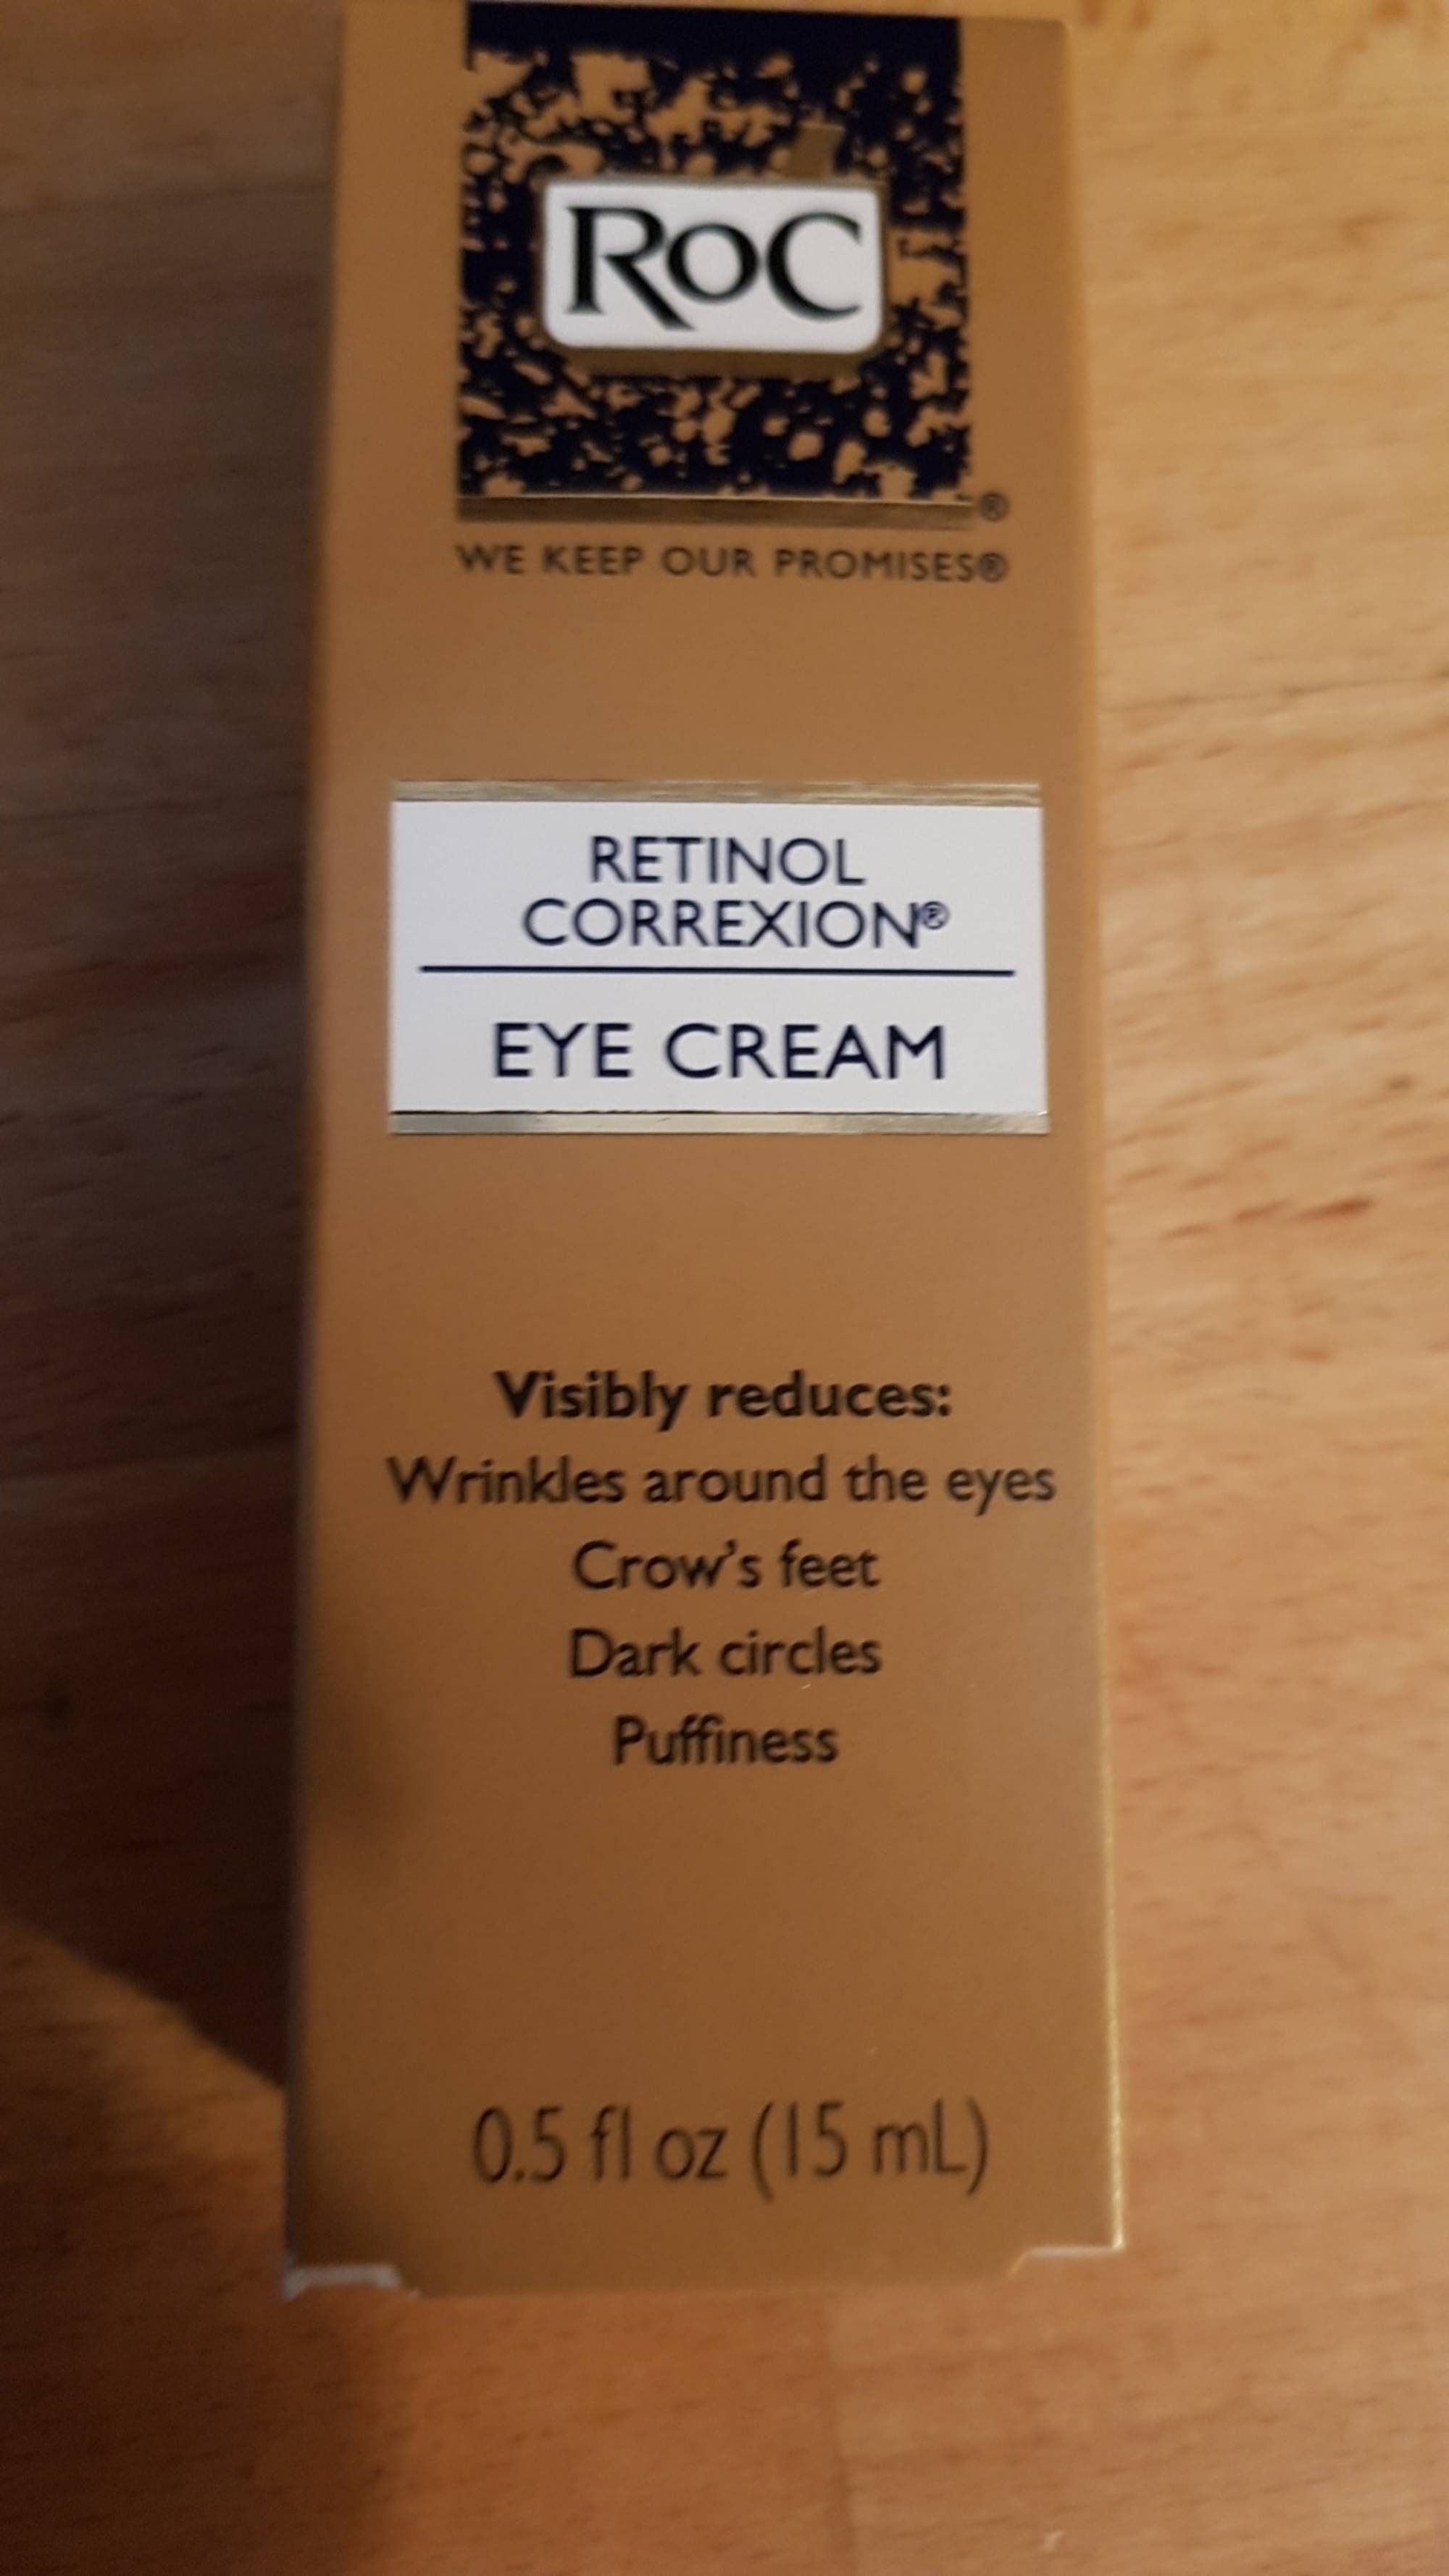 ROC - Retinol correxion - Eye cream